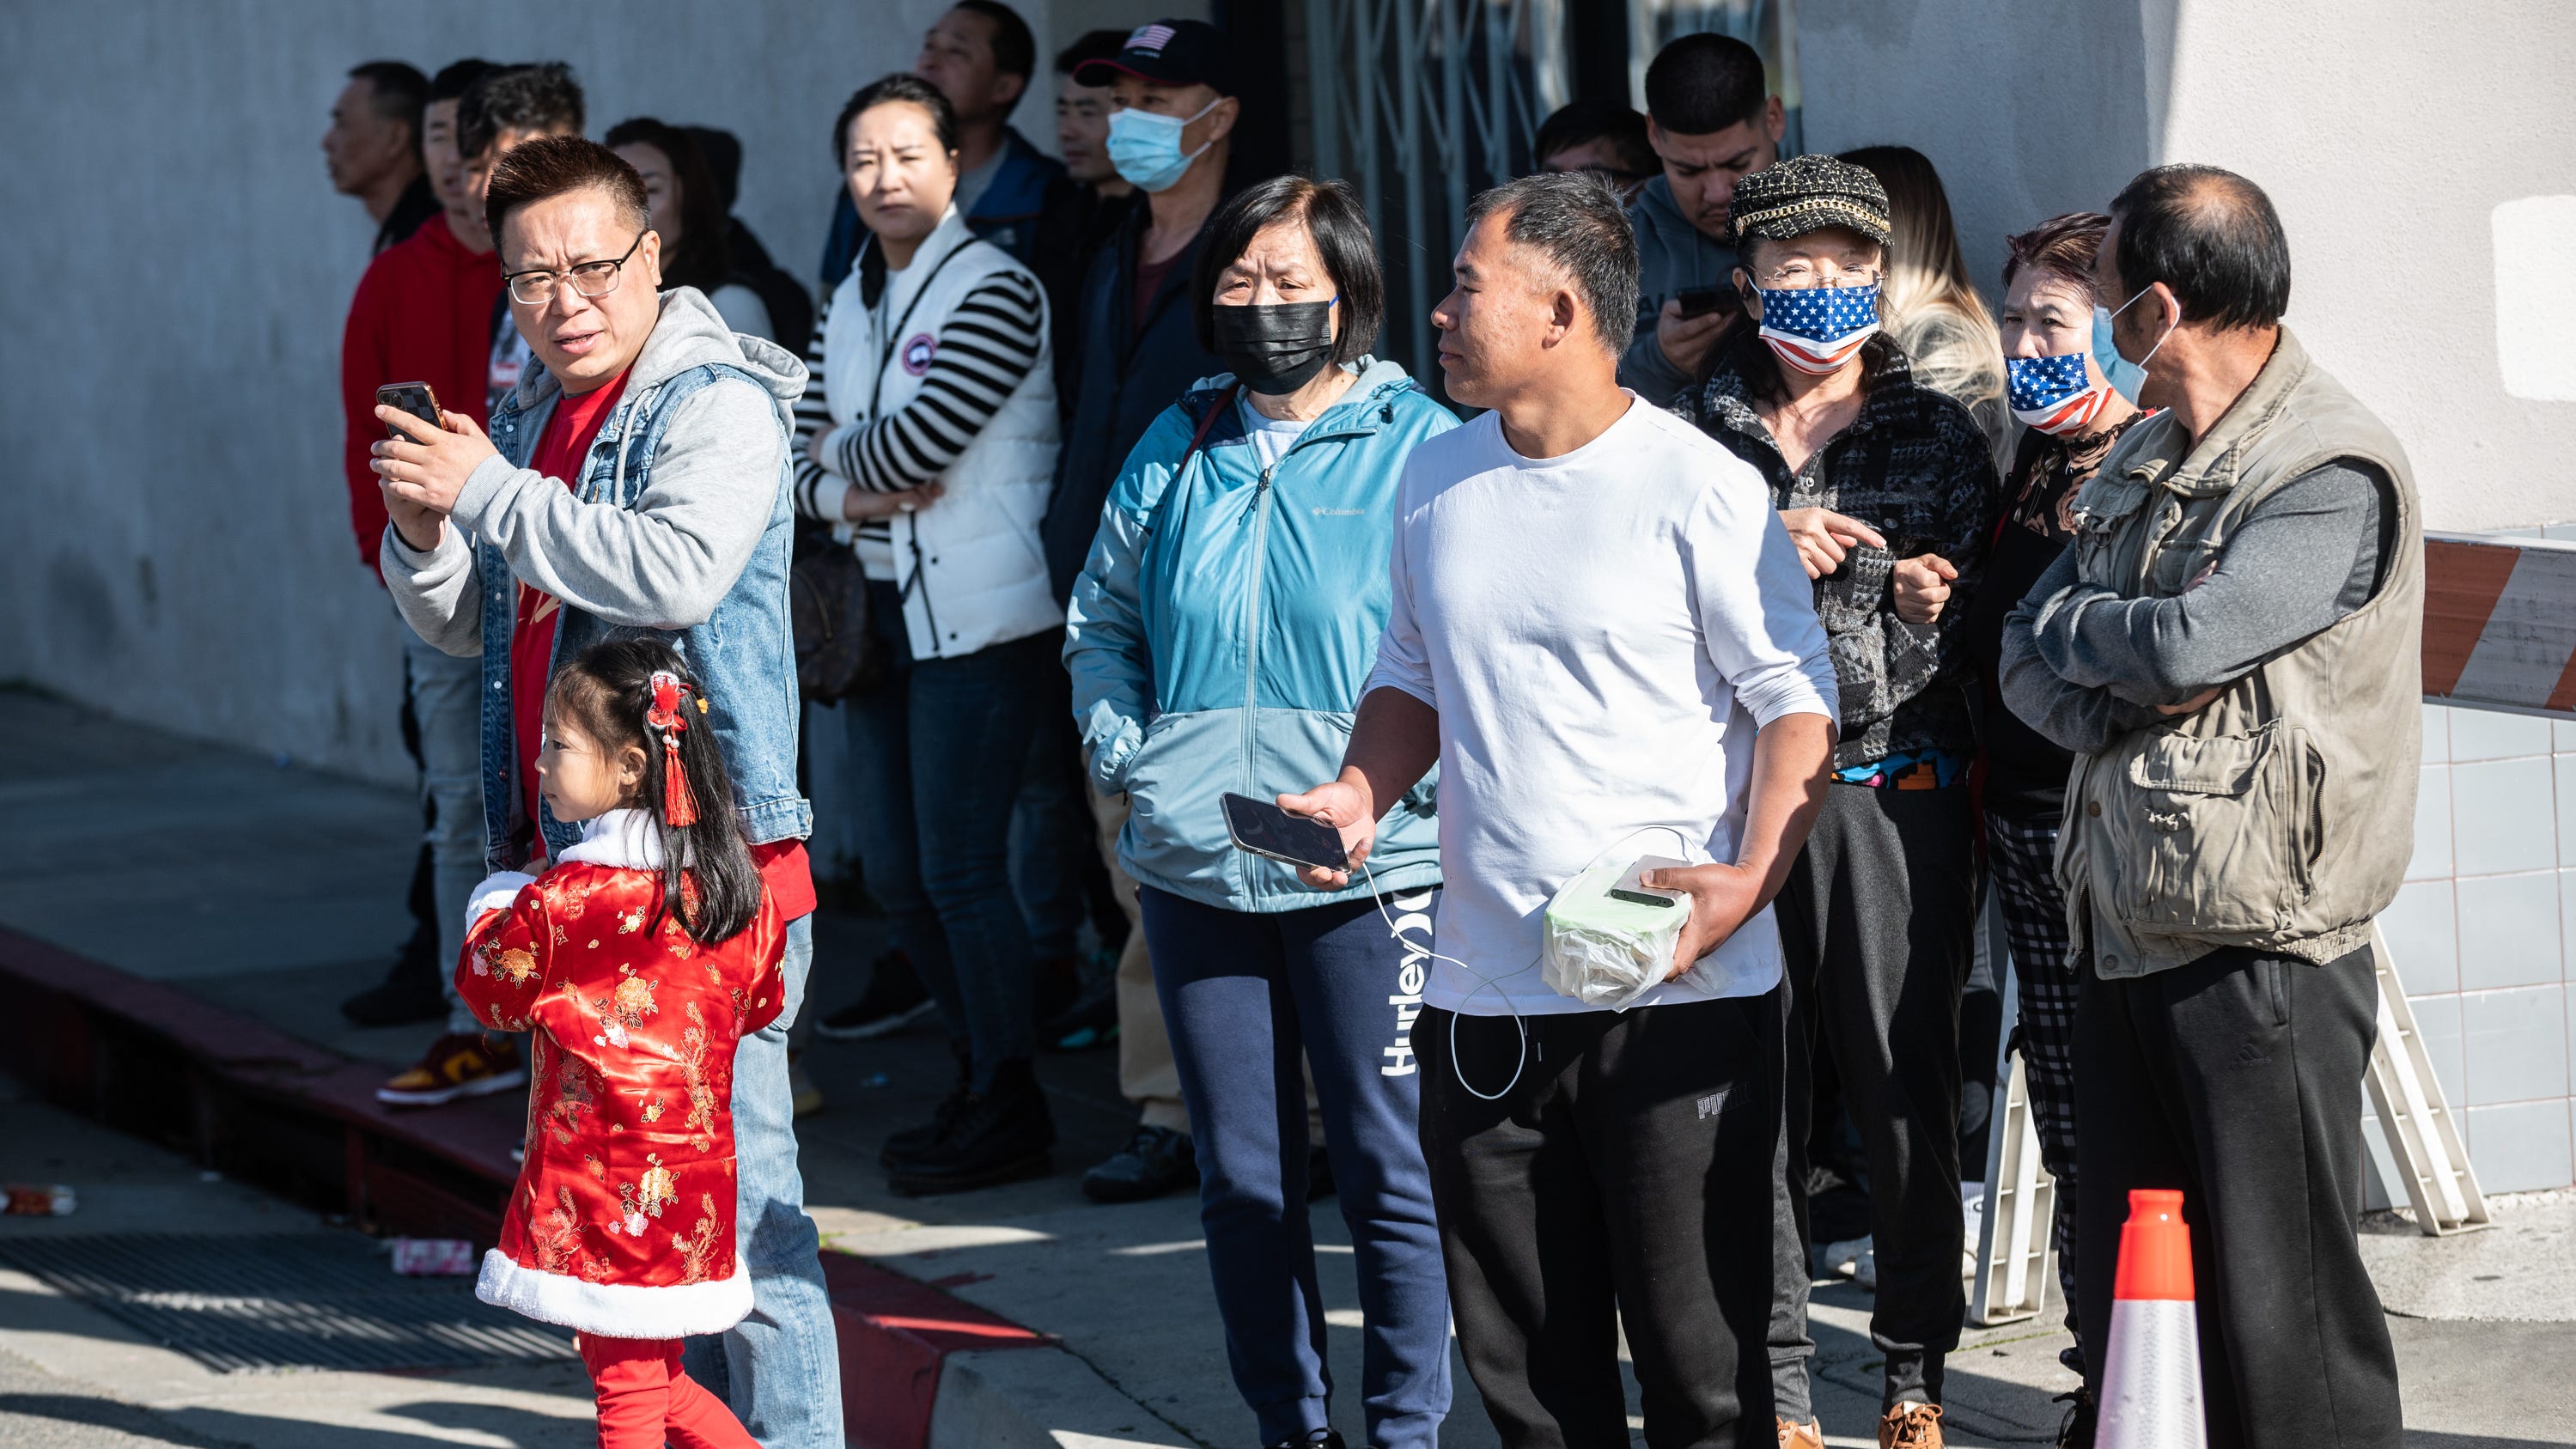 Lunar New Year shooting in Monterey Park devastates Asian Americans